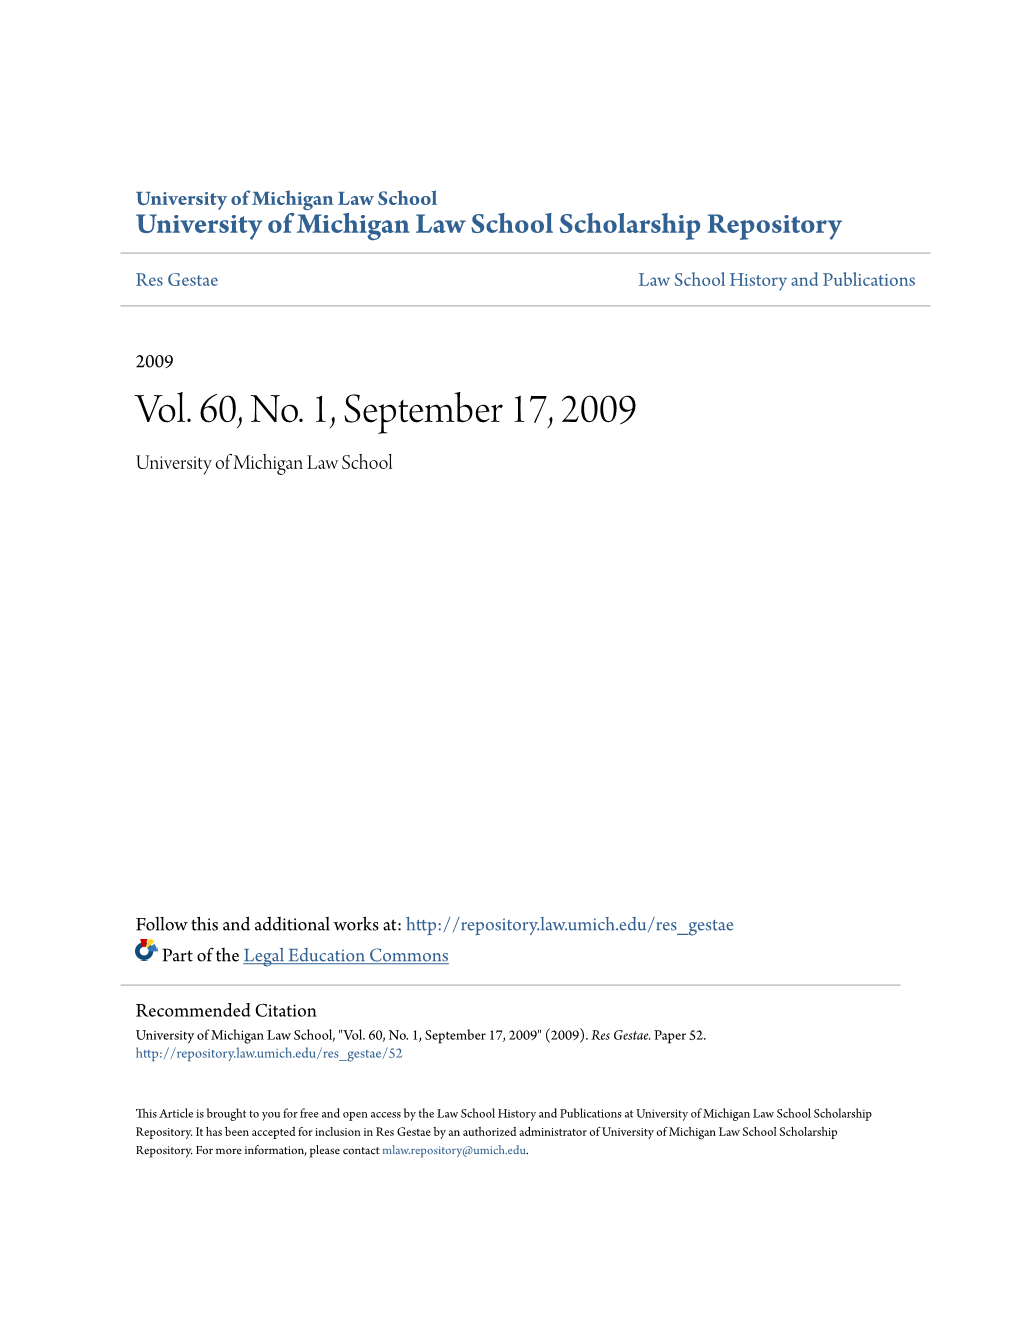 Vol. 60, No. 1, September 17, 2009 University of Michigan Law School